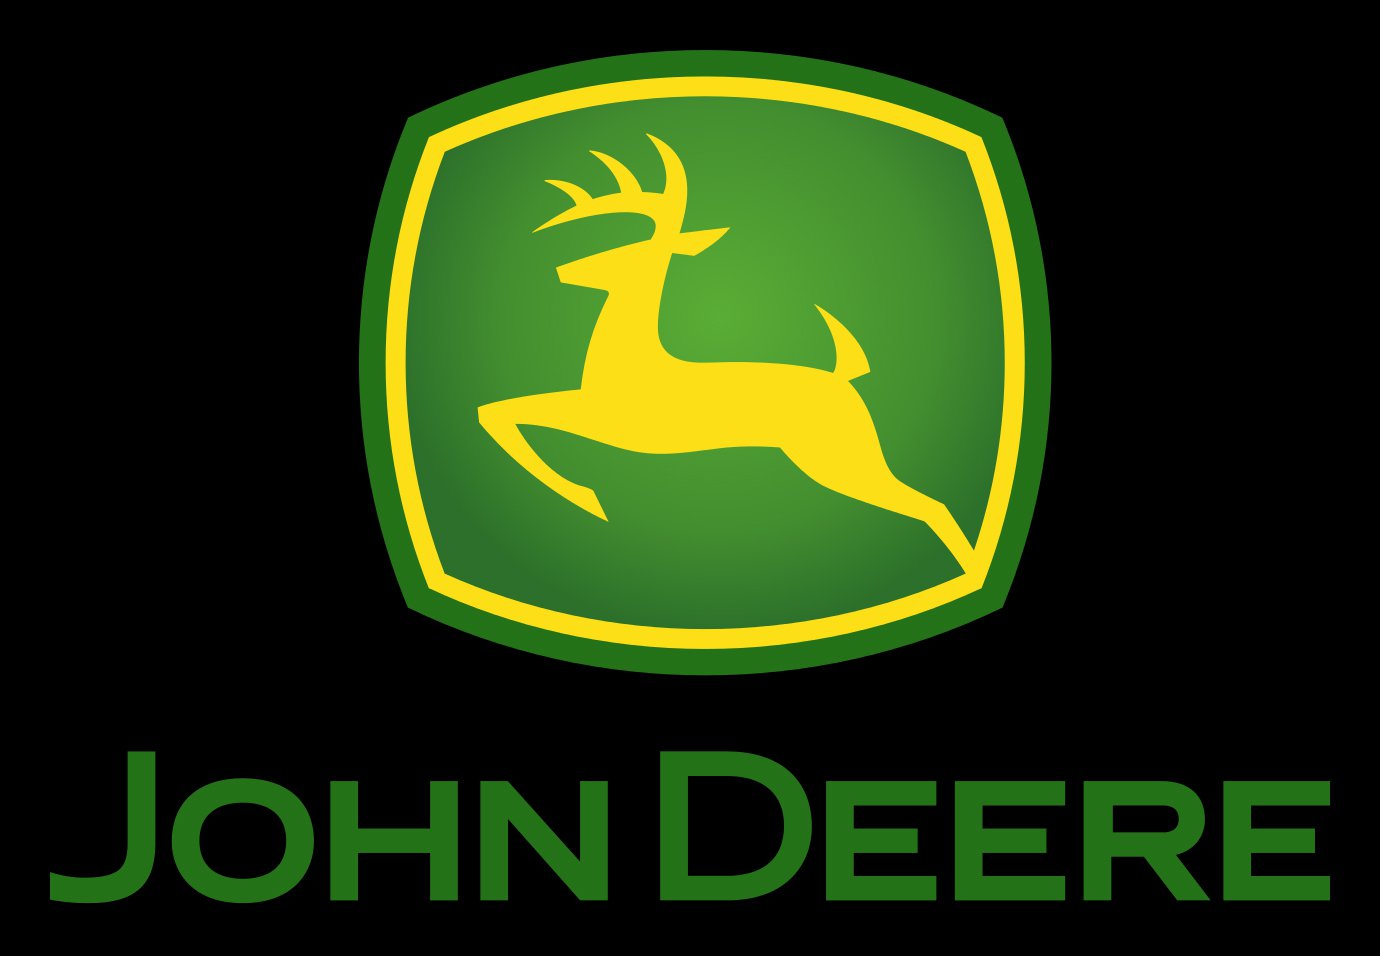 John Deere Agricultural Equipment Manufacturing